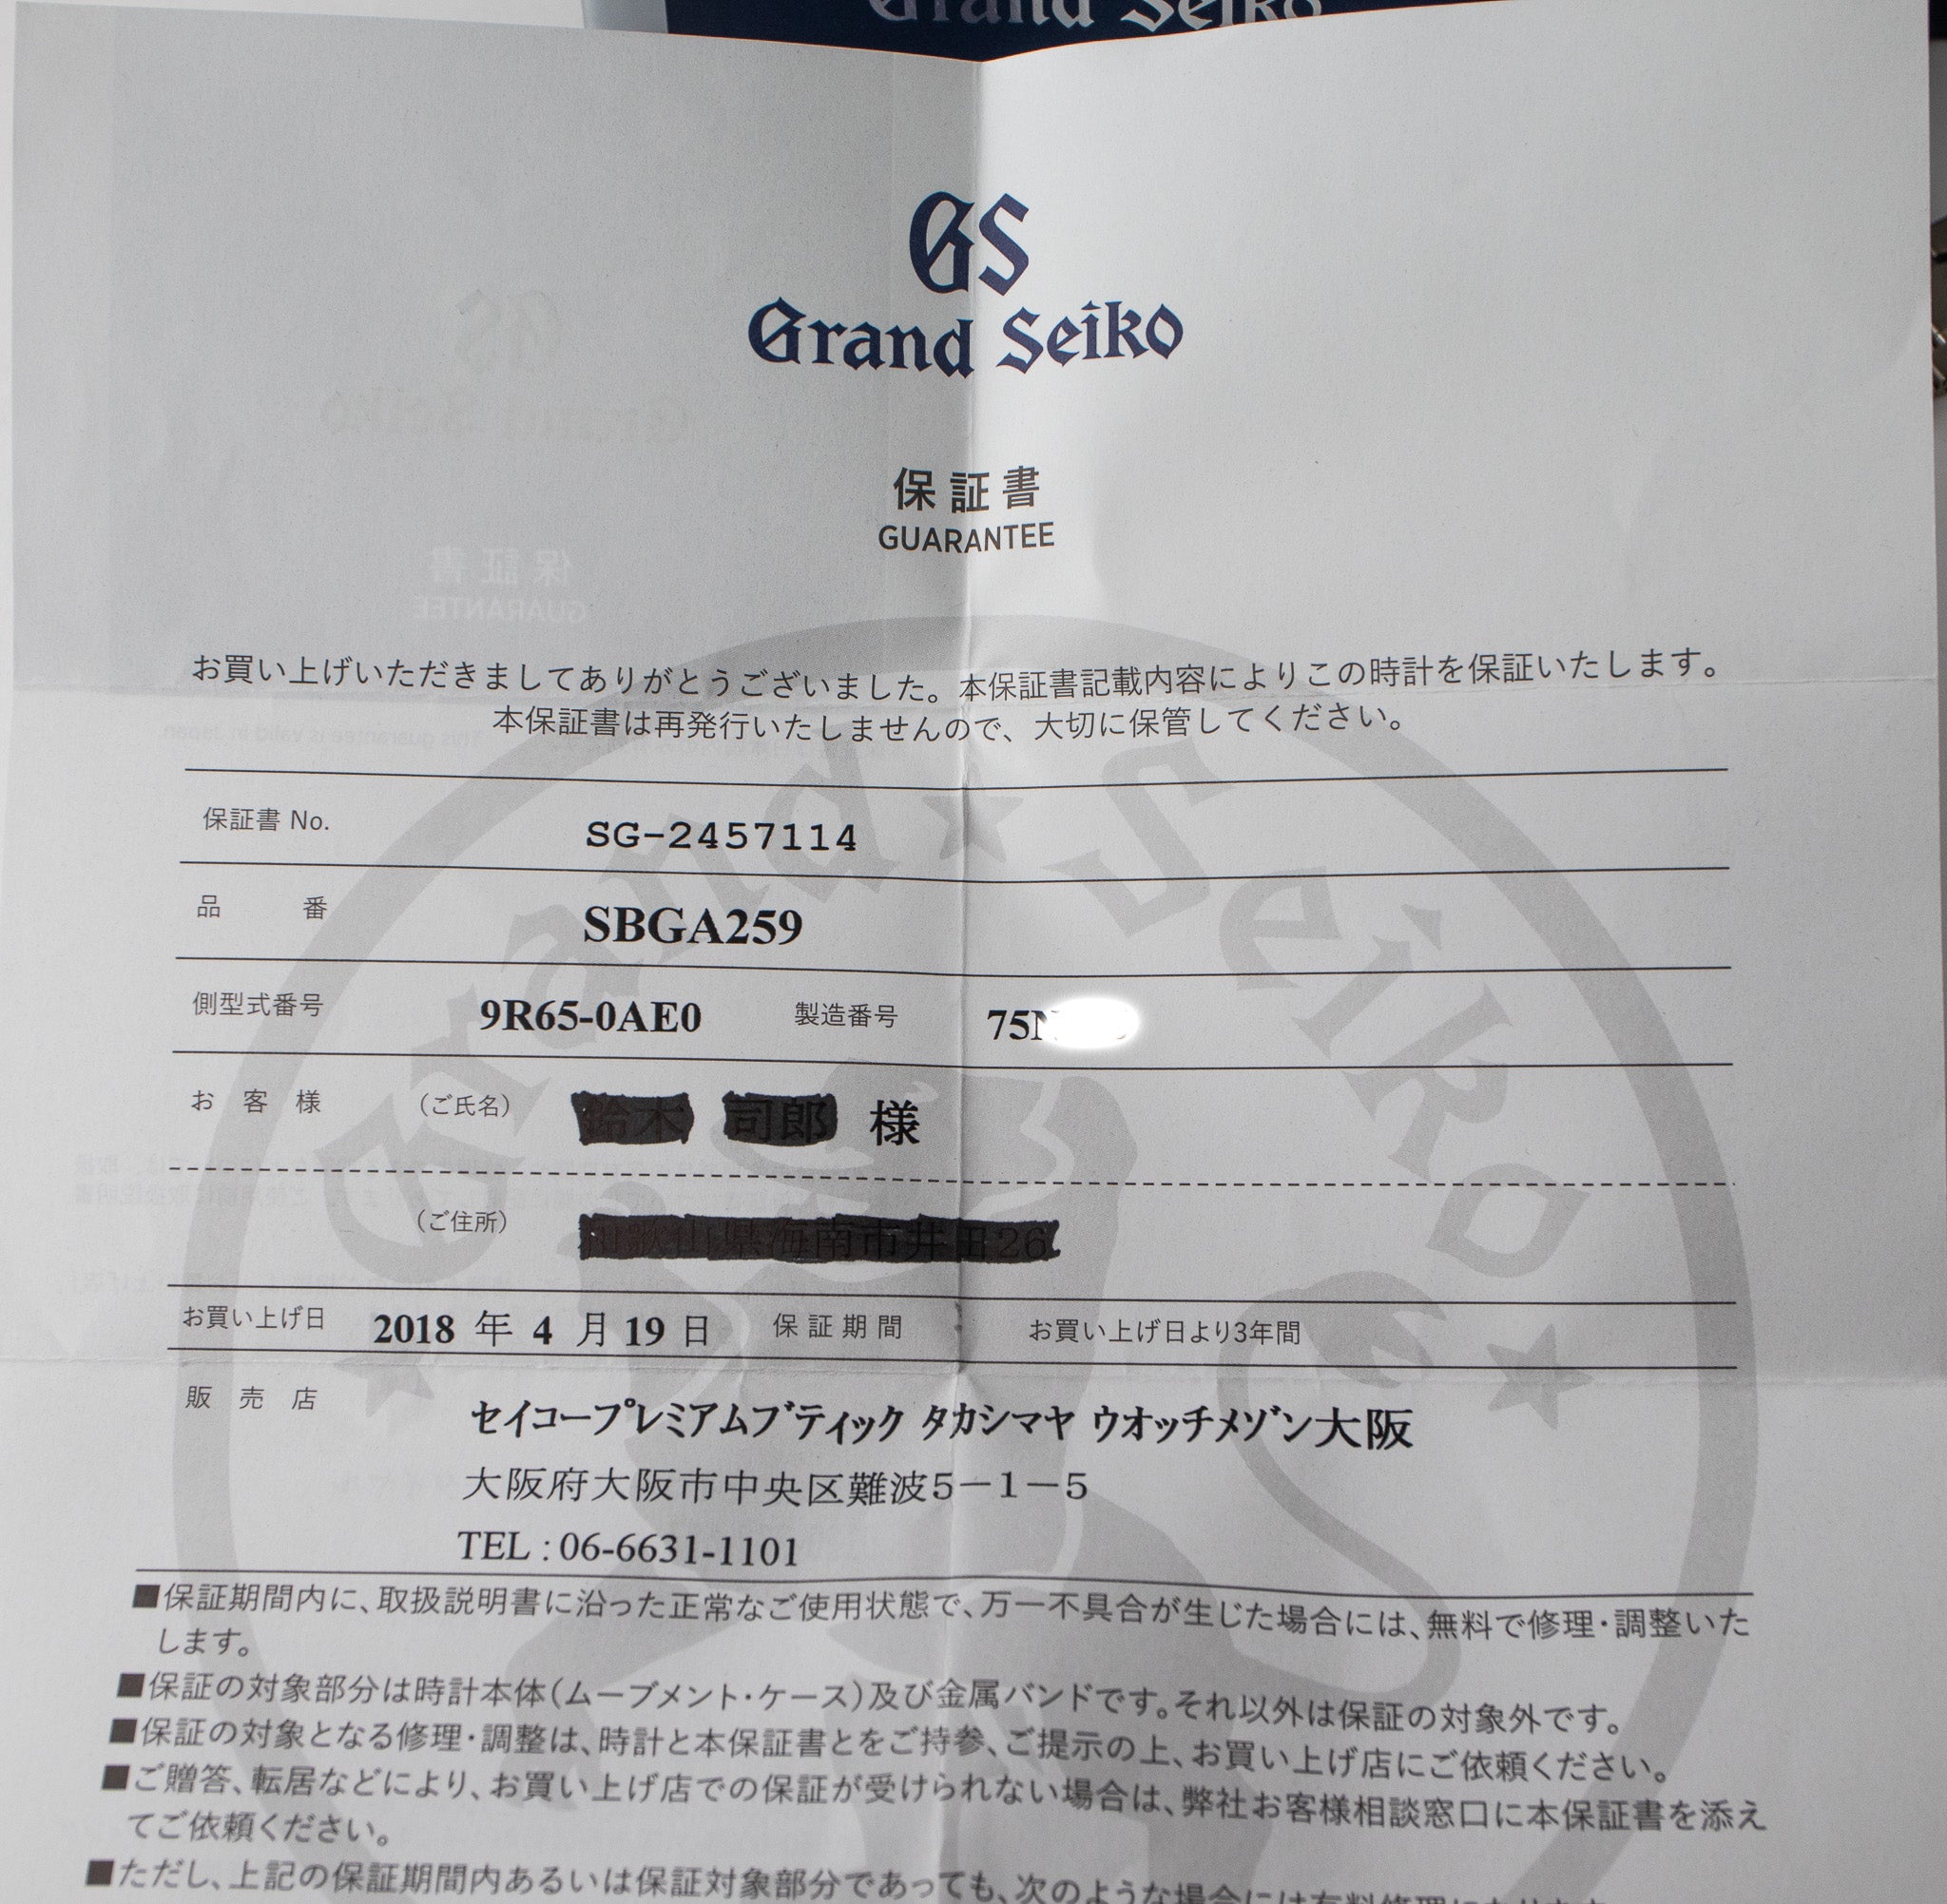 Grand Seiko SBGA259 “Gold Snowflake”